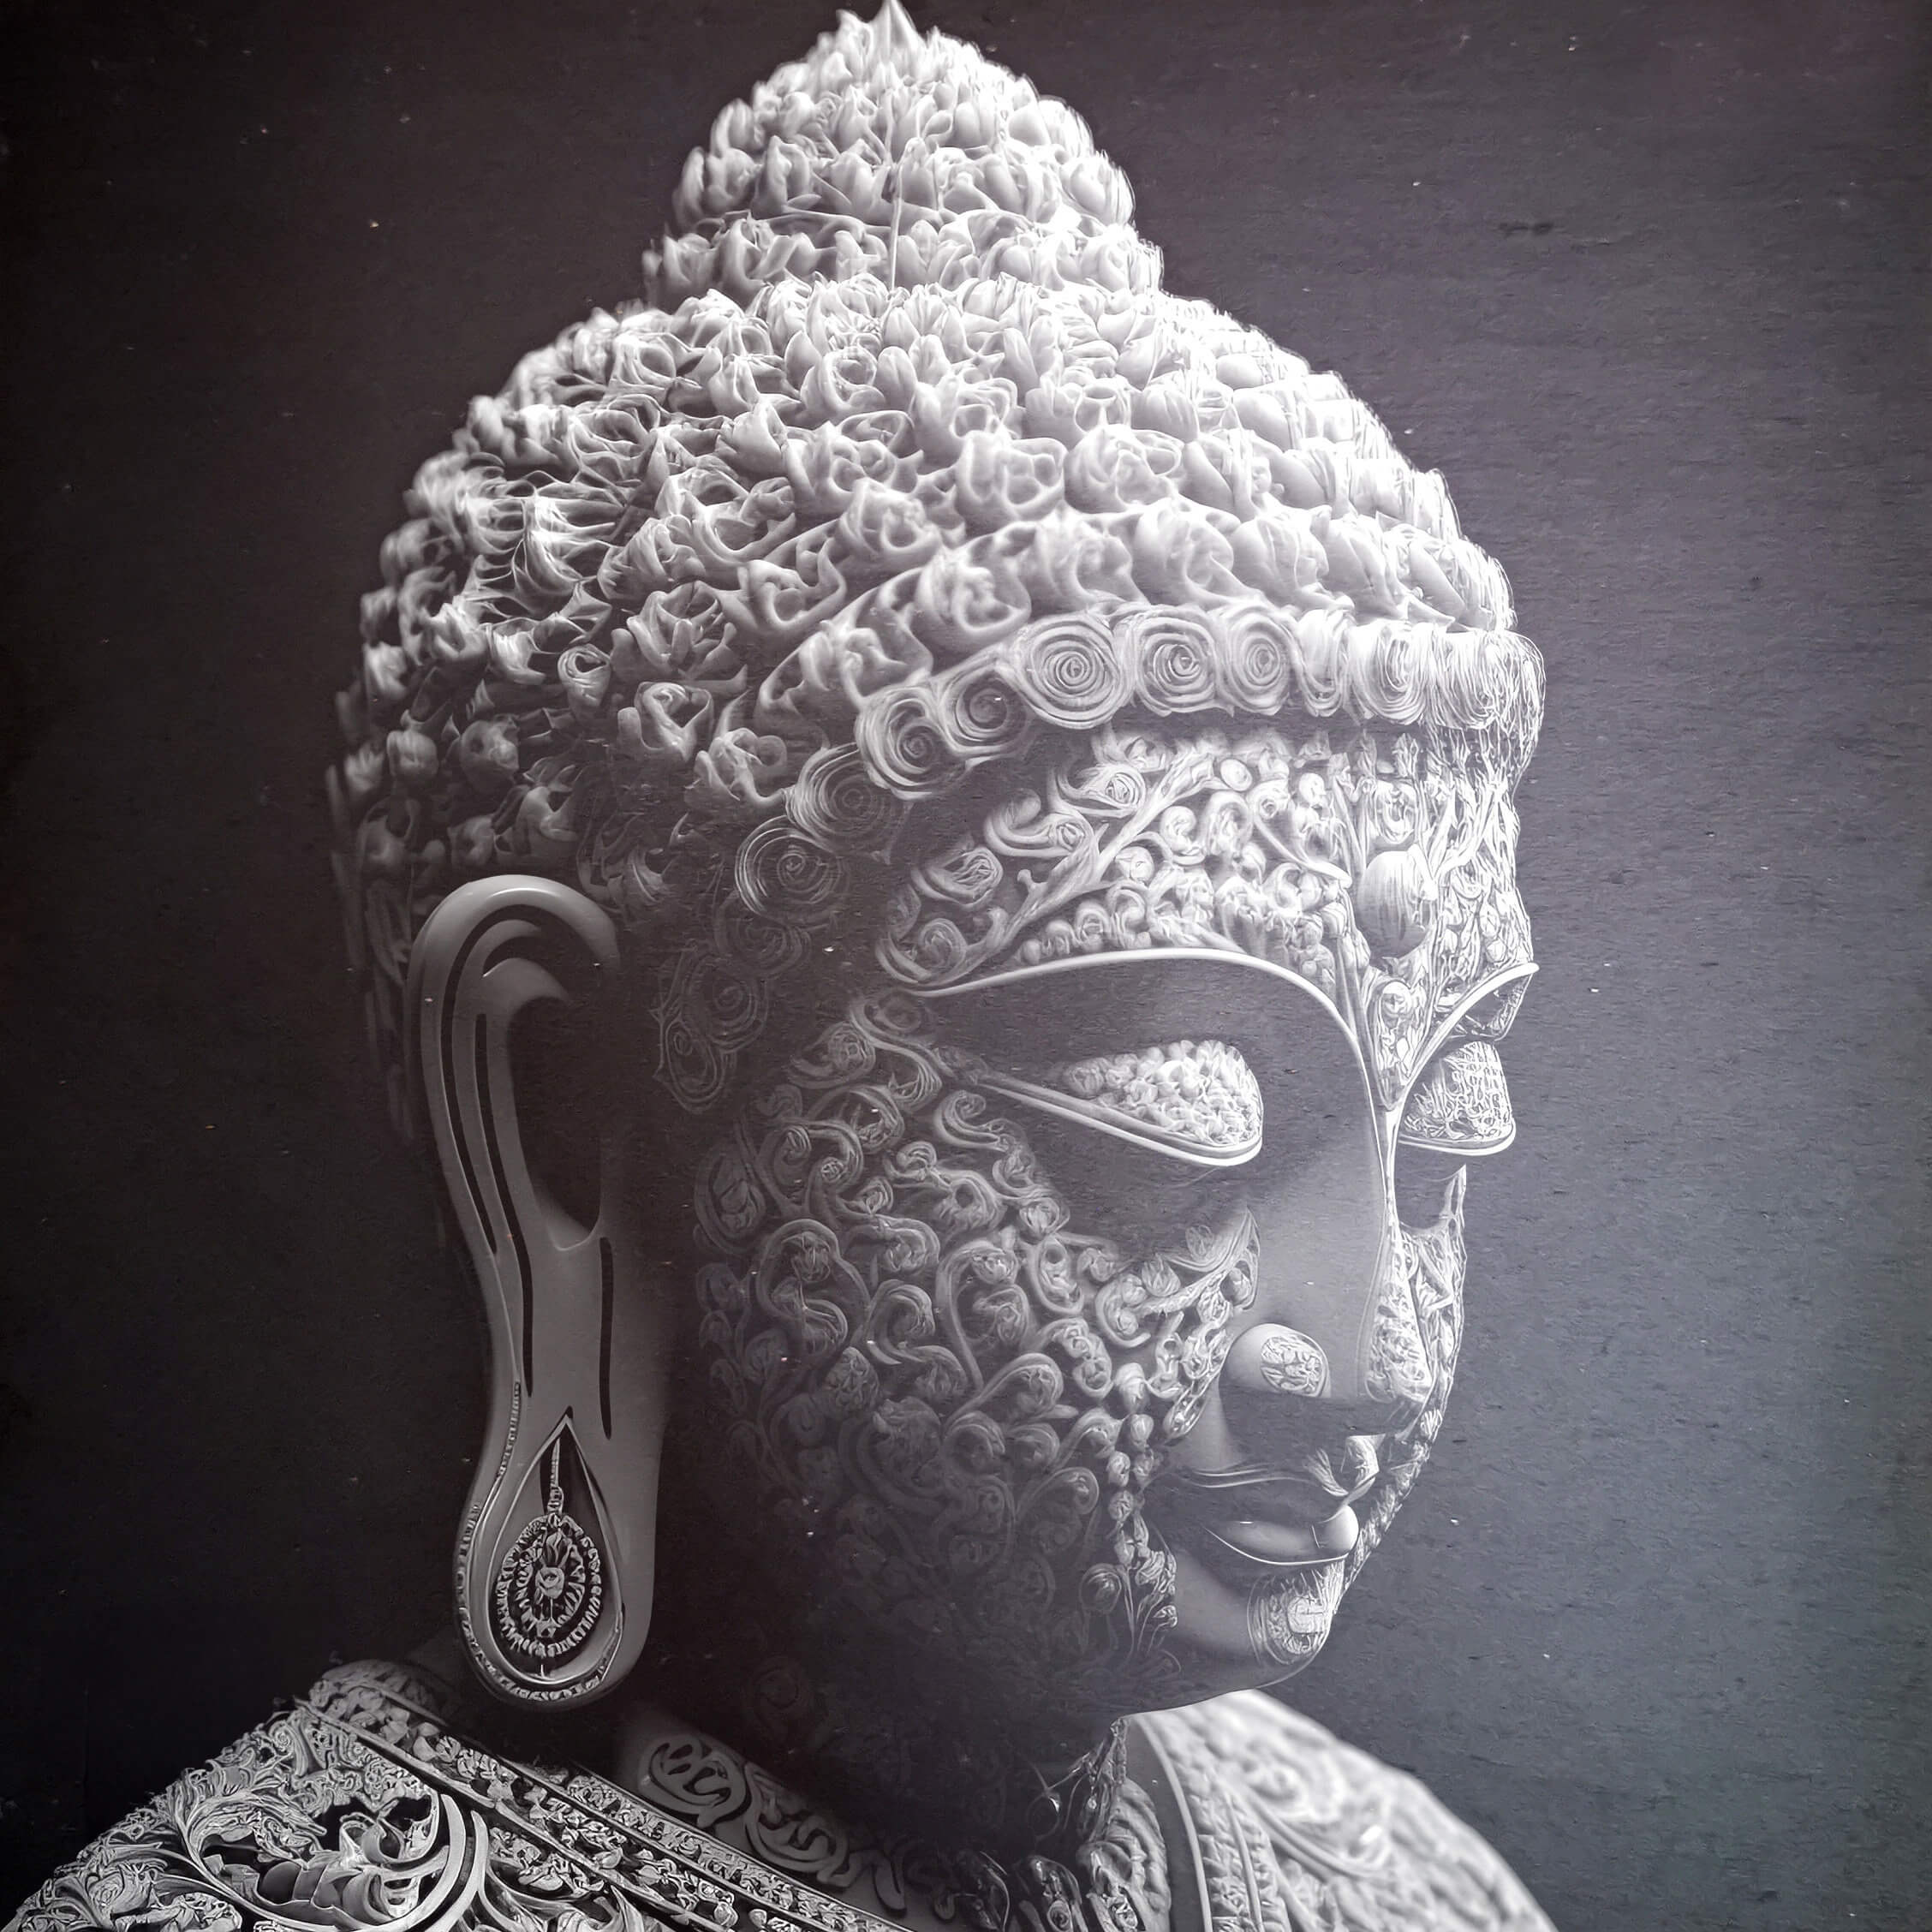 Pizarra - Tranquilidad Iluminada: Buda